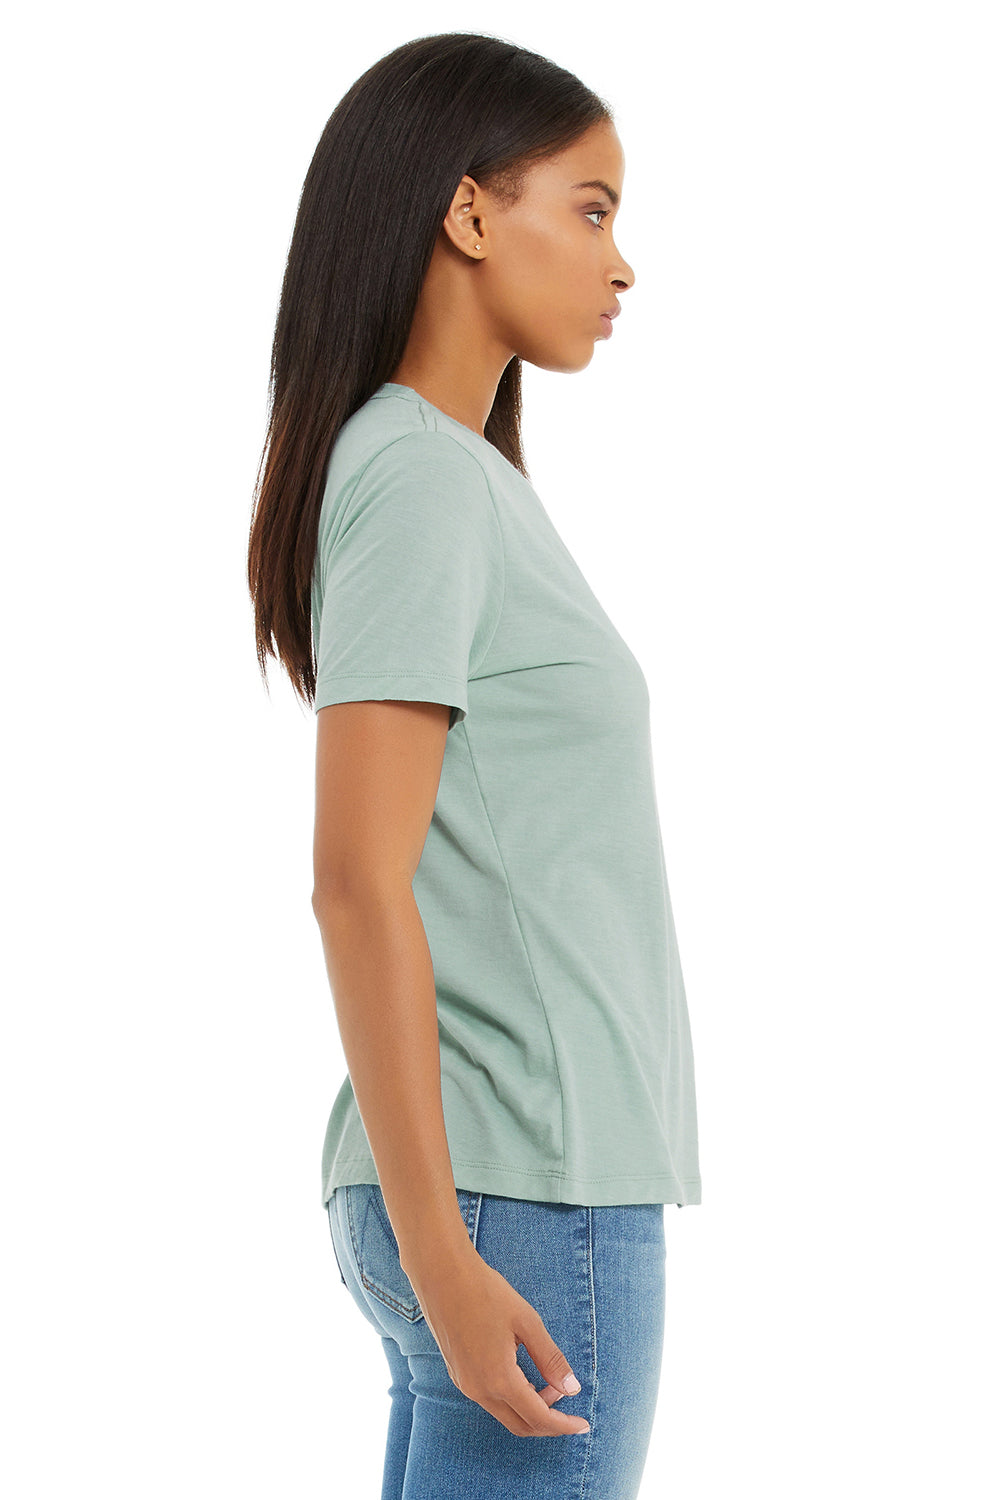 Bella + Canvas BC6413 Womens Short Sleeve Crewneck T-Shirt Dusty Blue Model Side